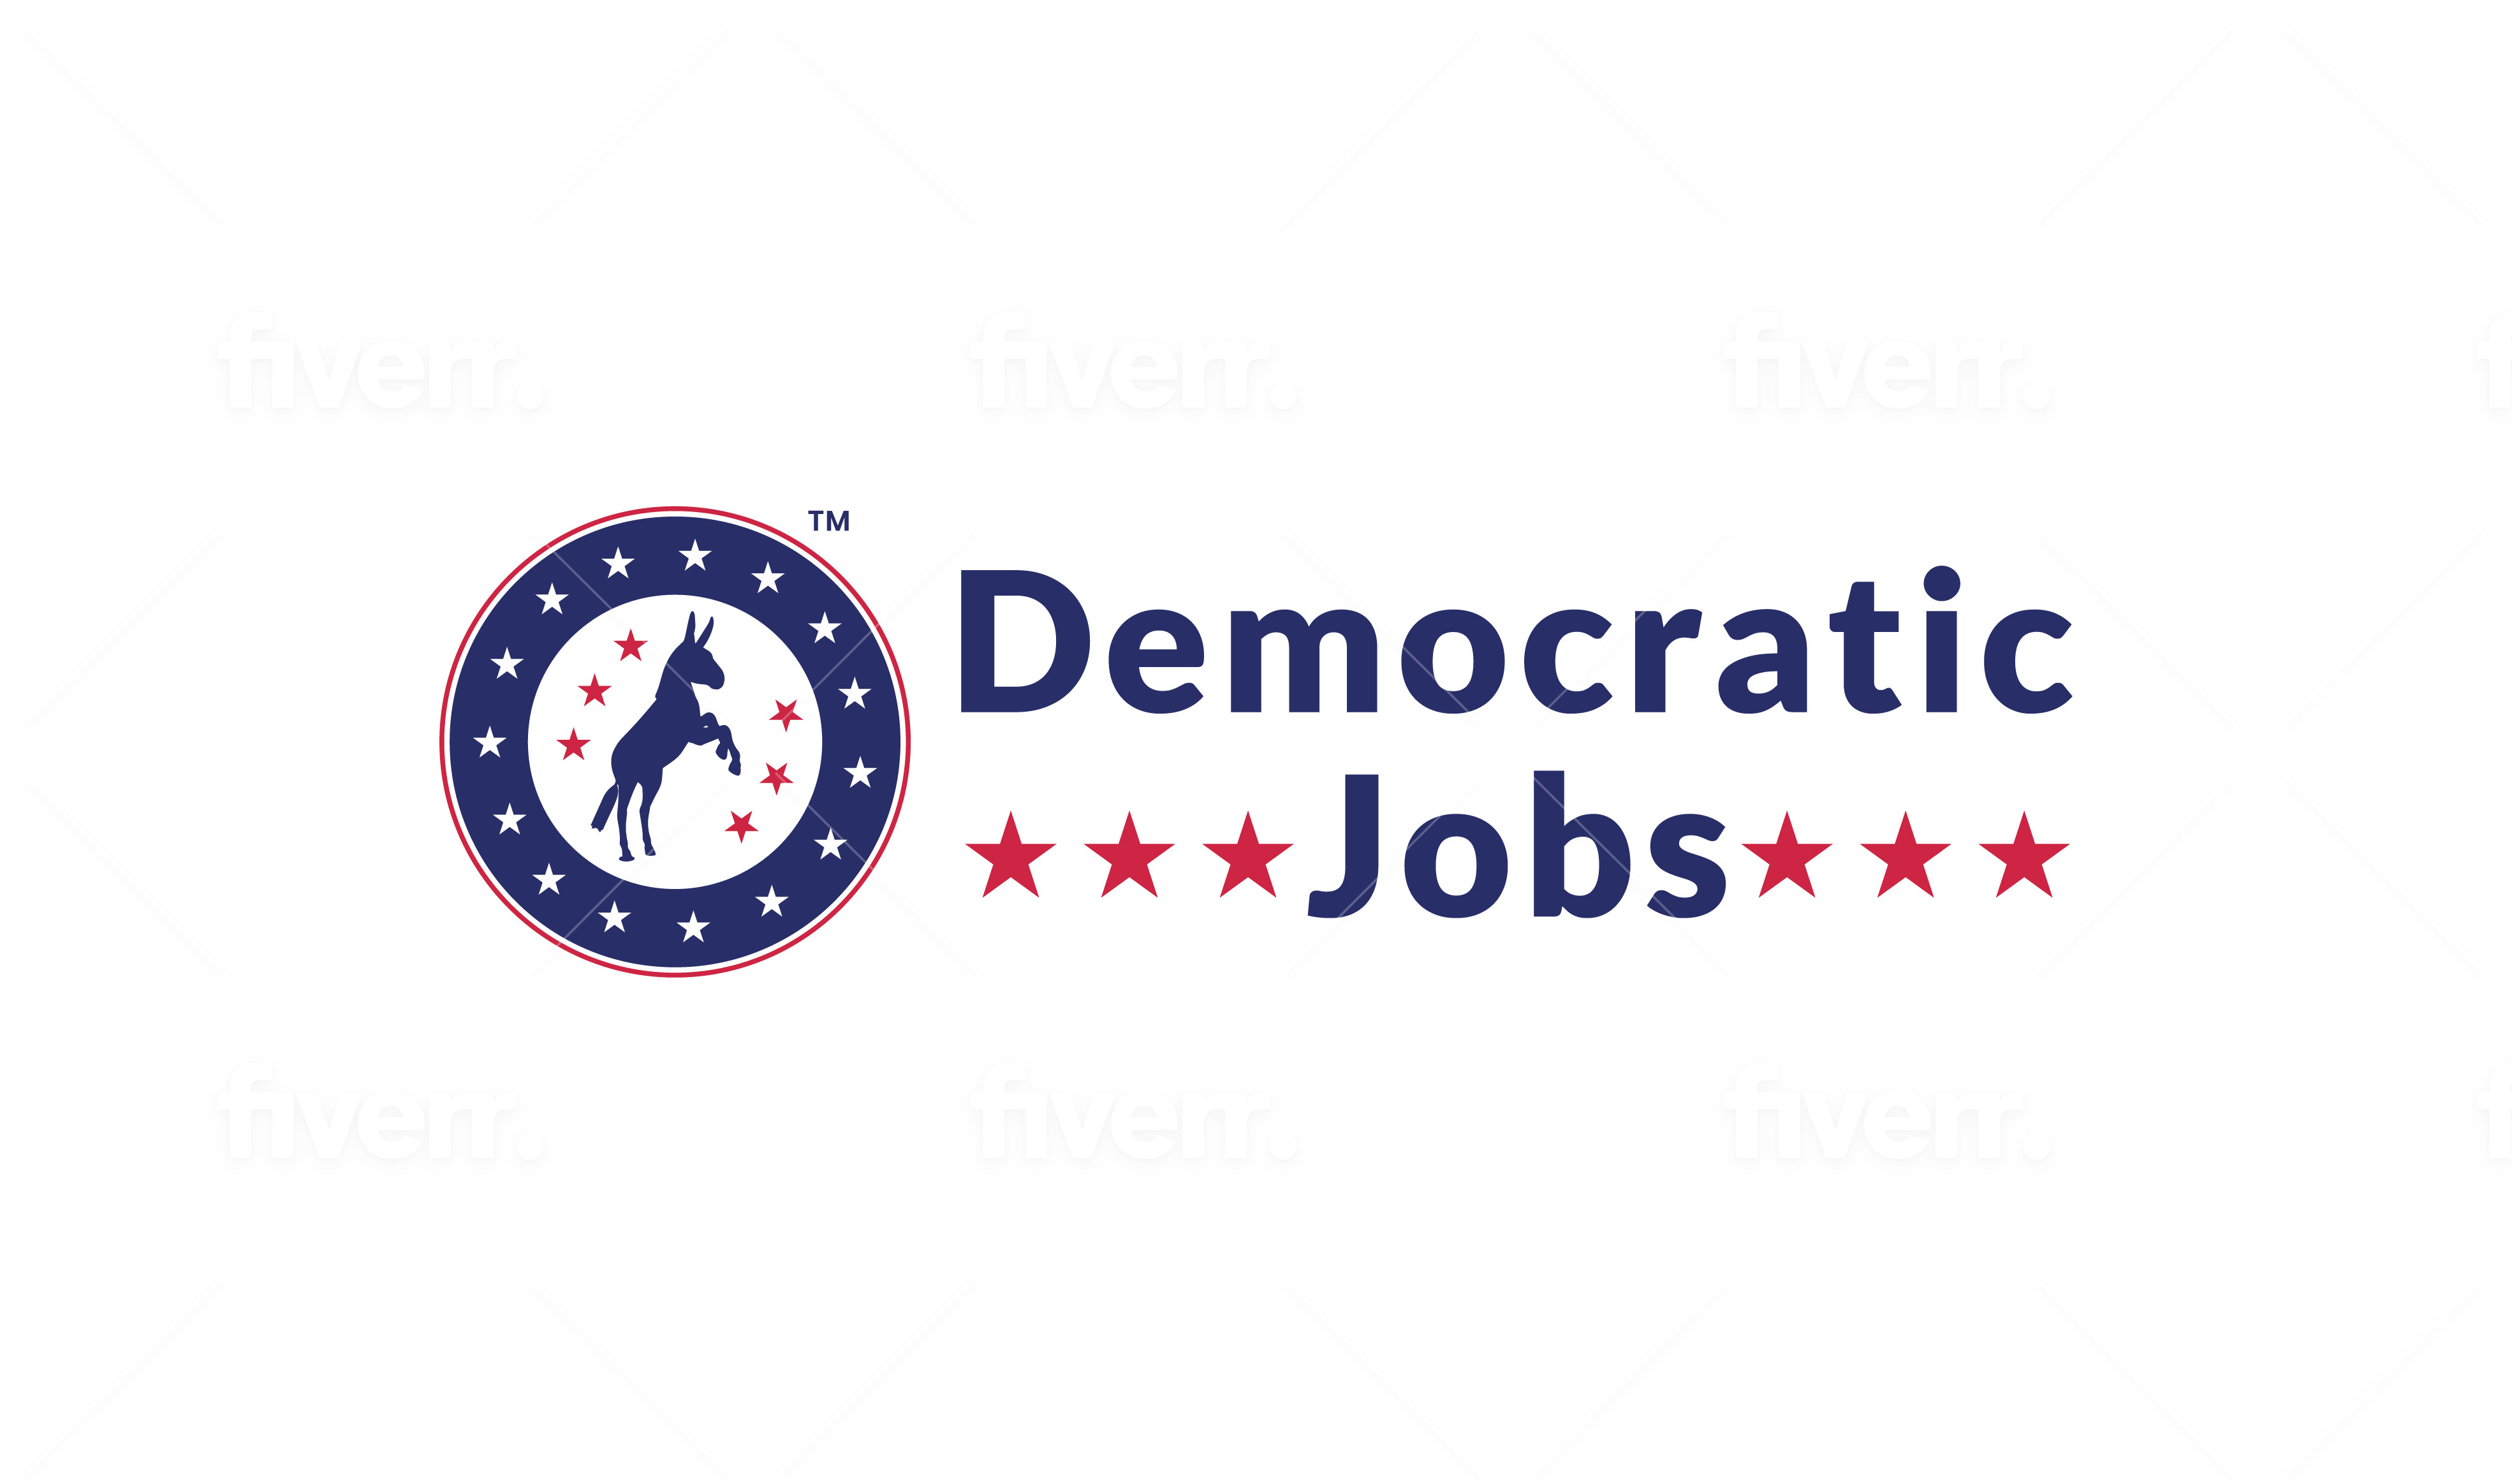 examples of democratic jobs